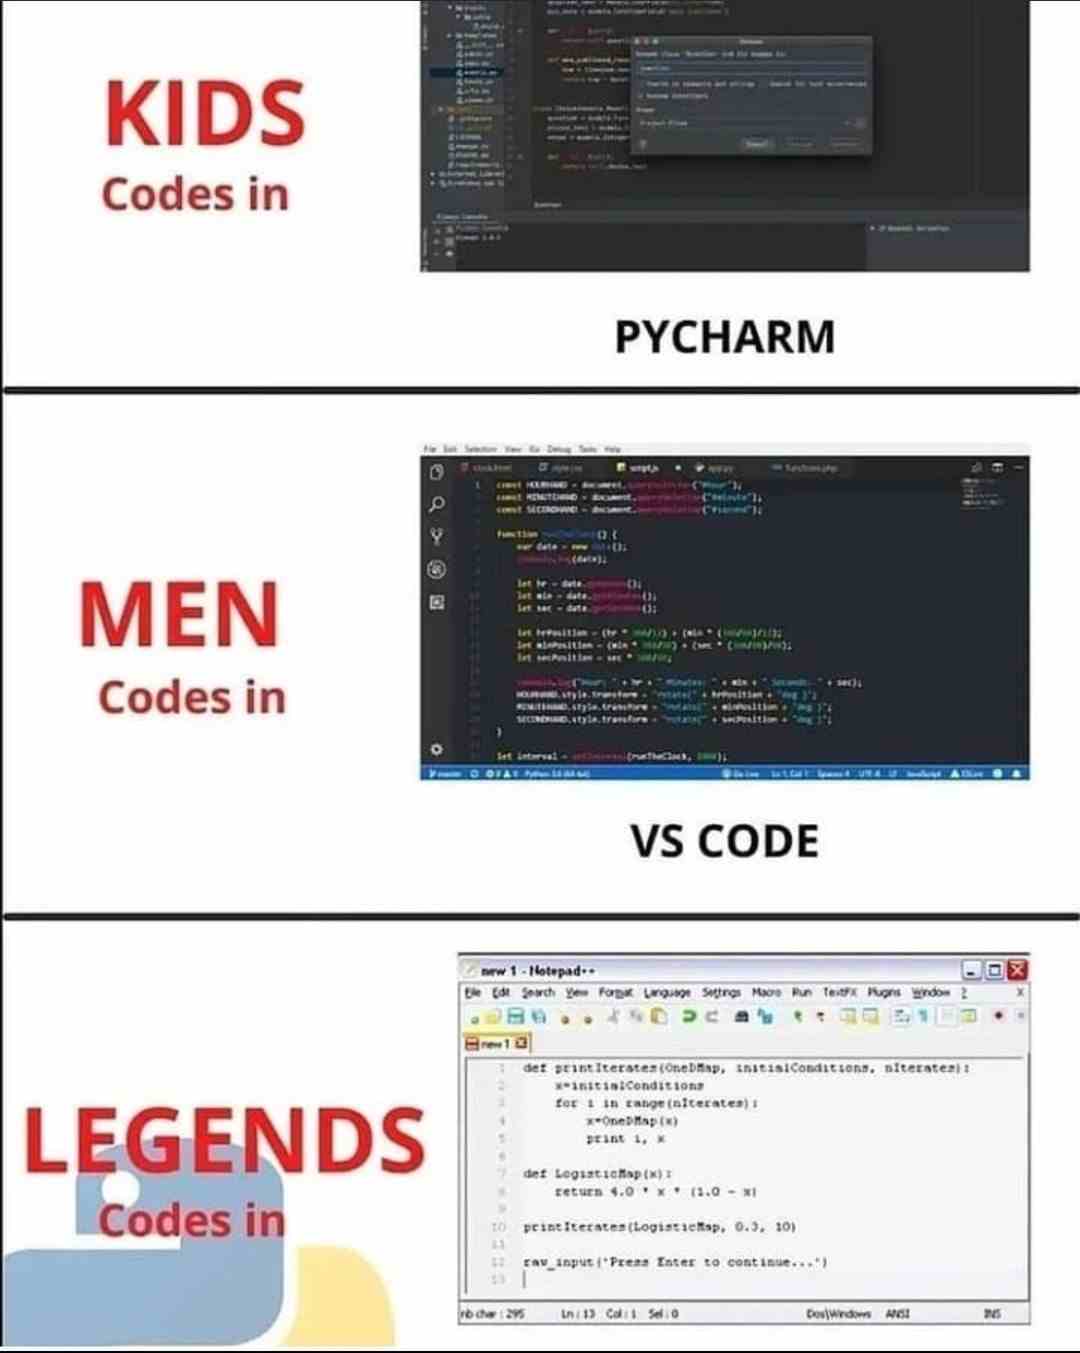 Kids codes in Men codes in and Legends Code in